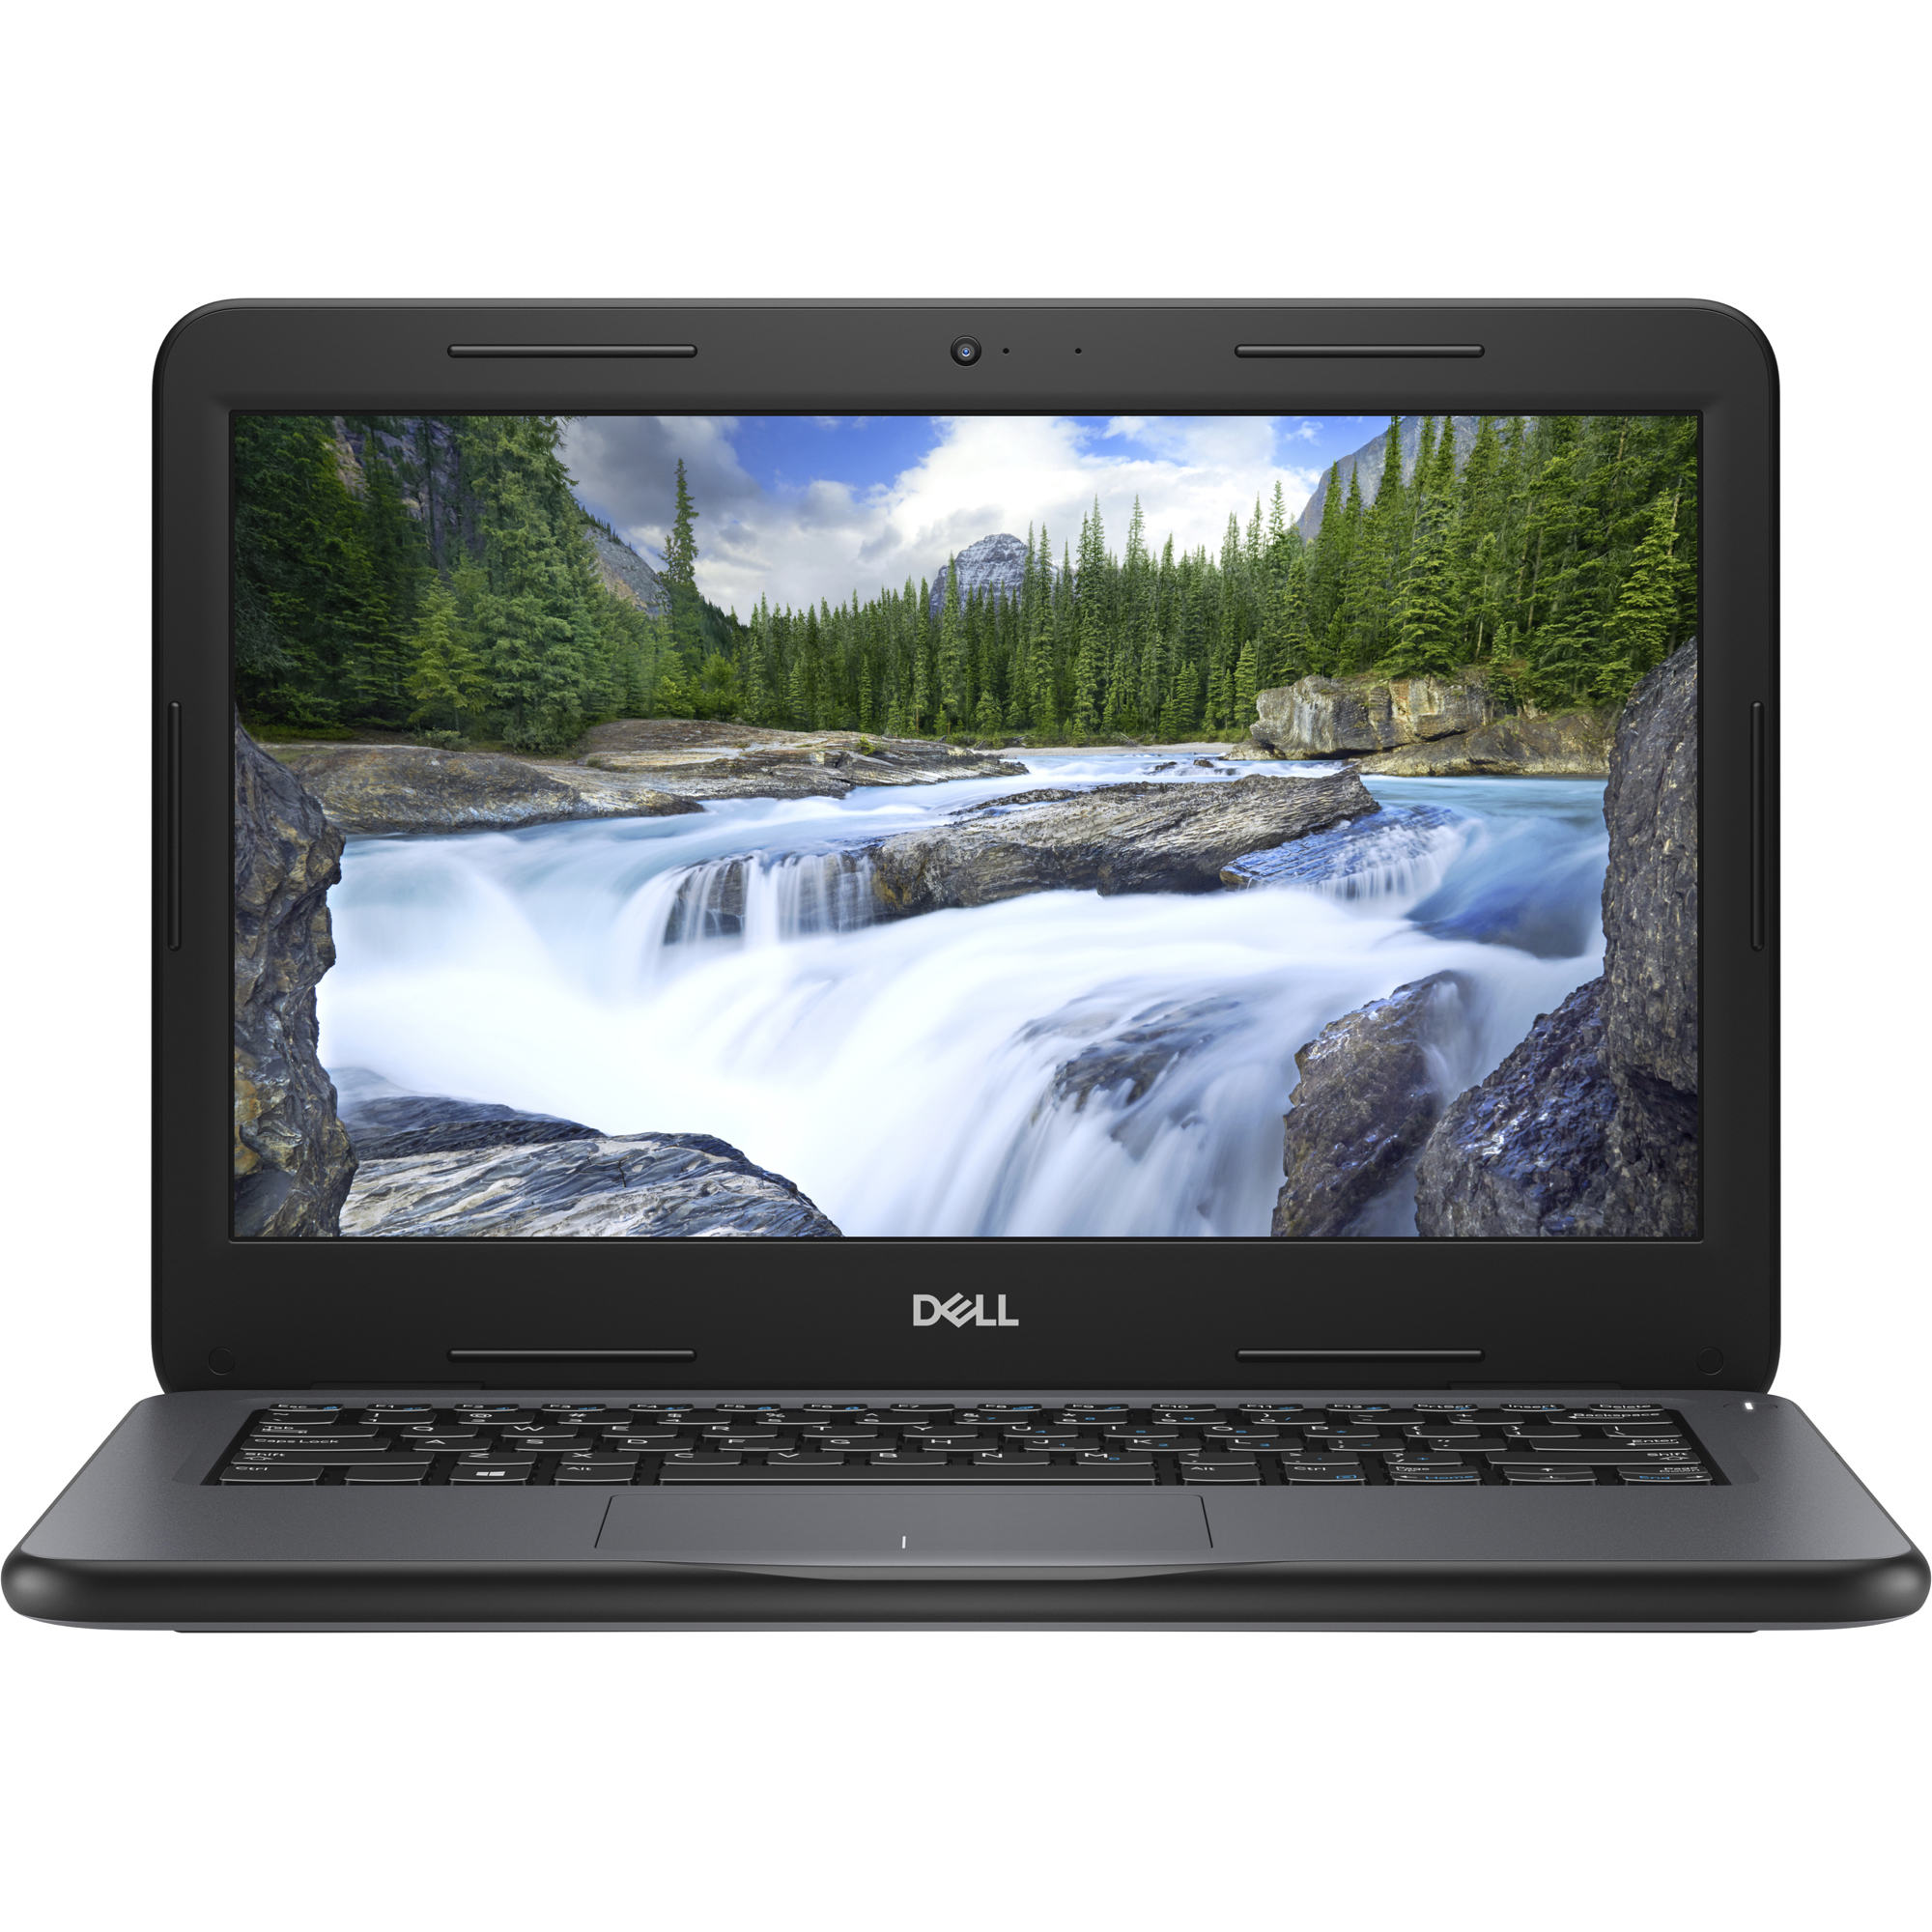 Dell Chromebook 11 3000 3100 11.6" 2 in 1 Chromebook - Intel Celeron N4020 - 8GB RAM - 32GB Flash Memory - 1366 x 768 - Intel HD Graphics - Chrome OS - Convertible - Black - image 1 of 5